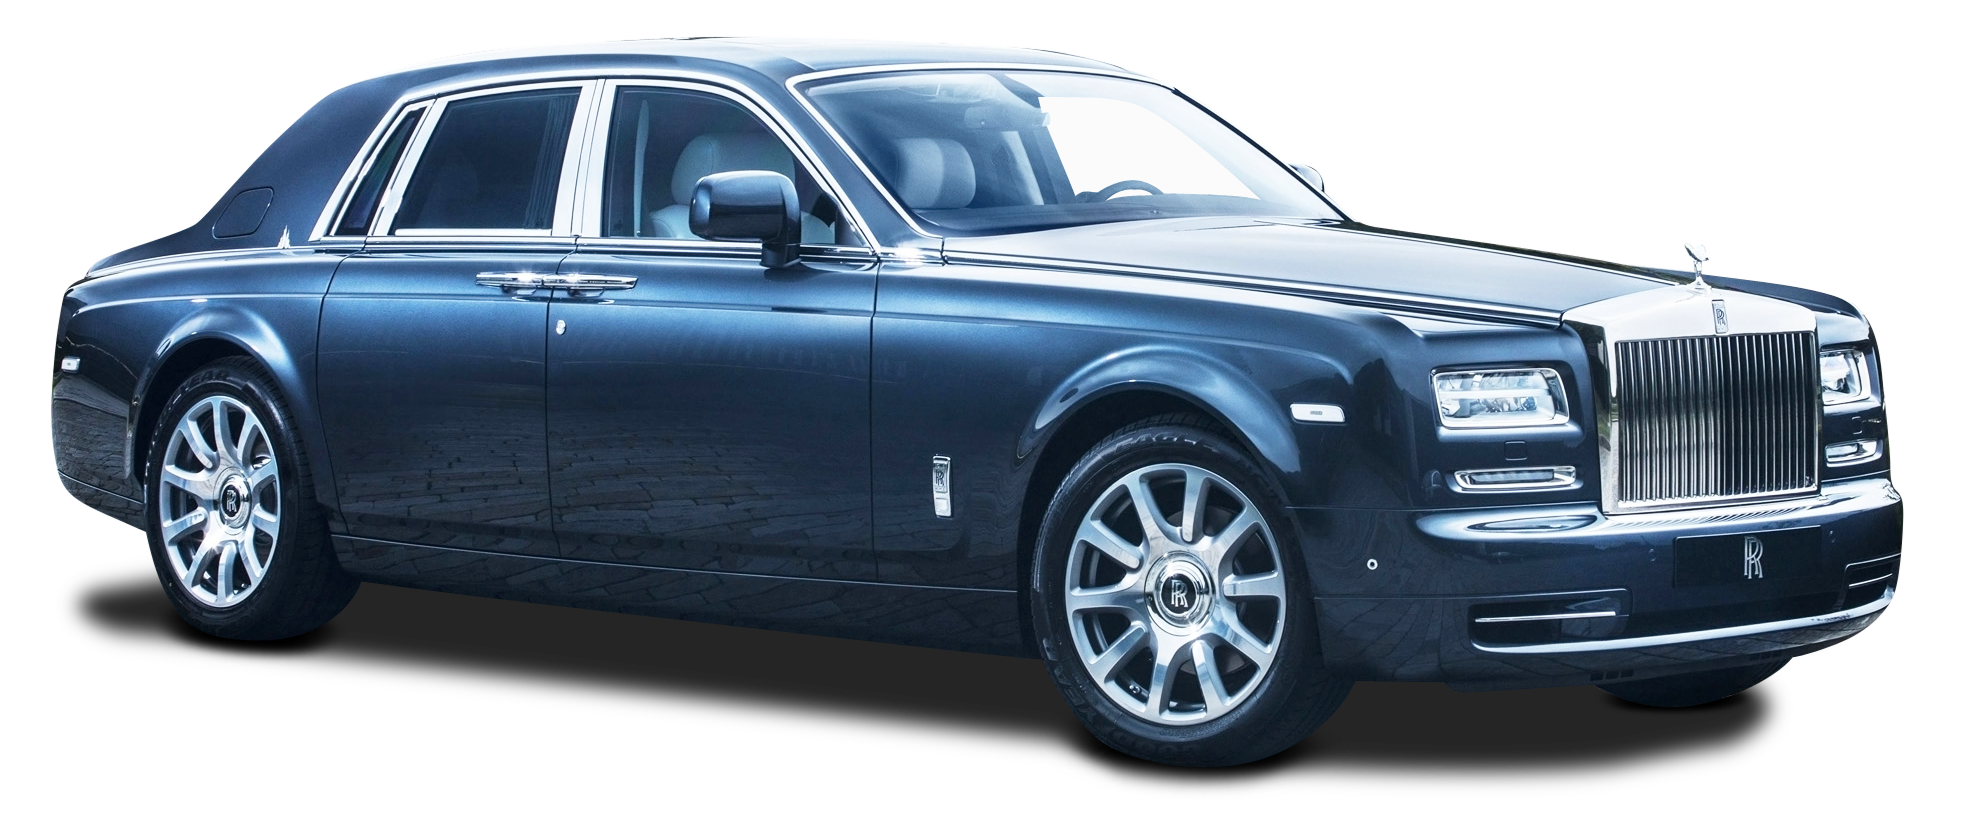 Rolls Royce Phantom Metropolitan Collection Car